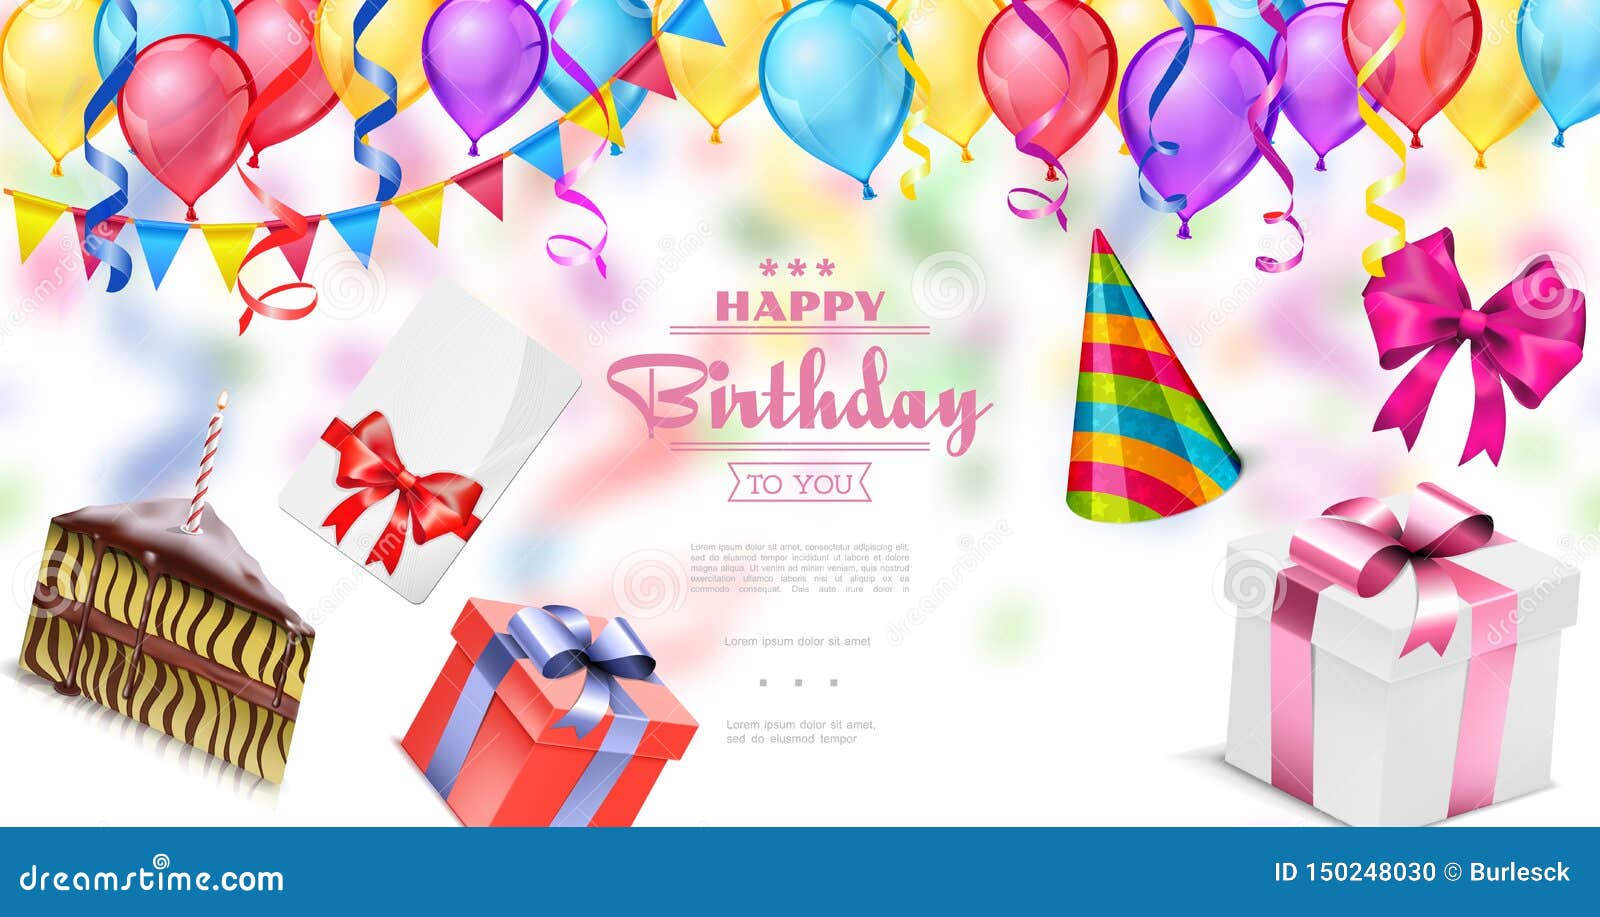 Realistic Happy Birthday Template Stock Vector - Illustration of ...